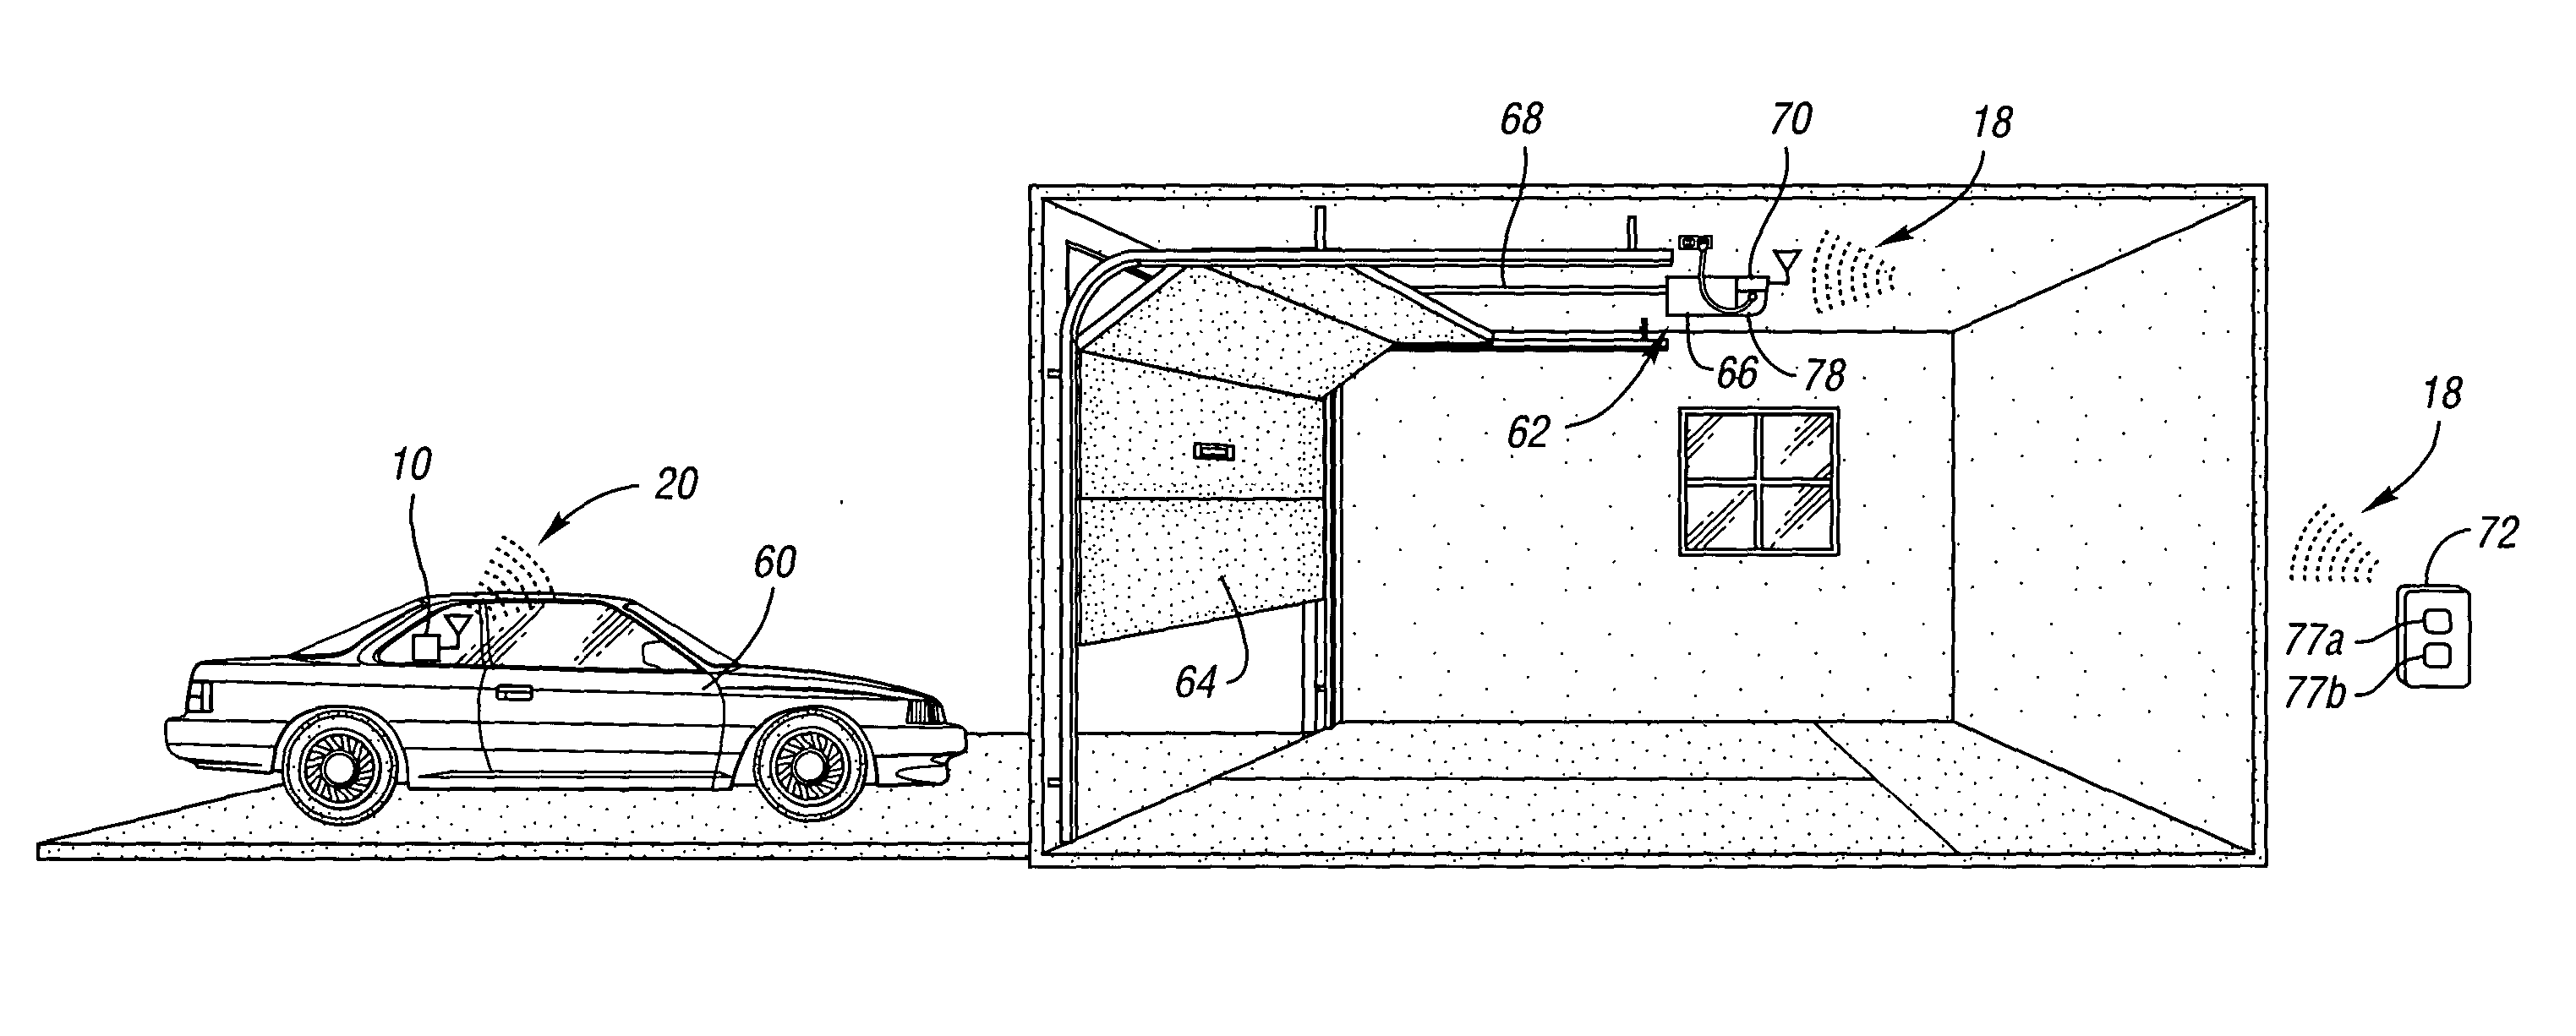 Universal vehicle based garage door opener control system and method